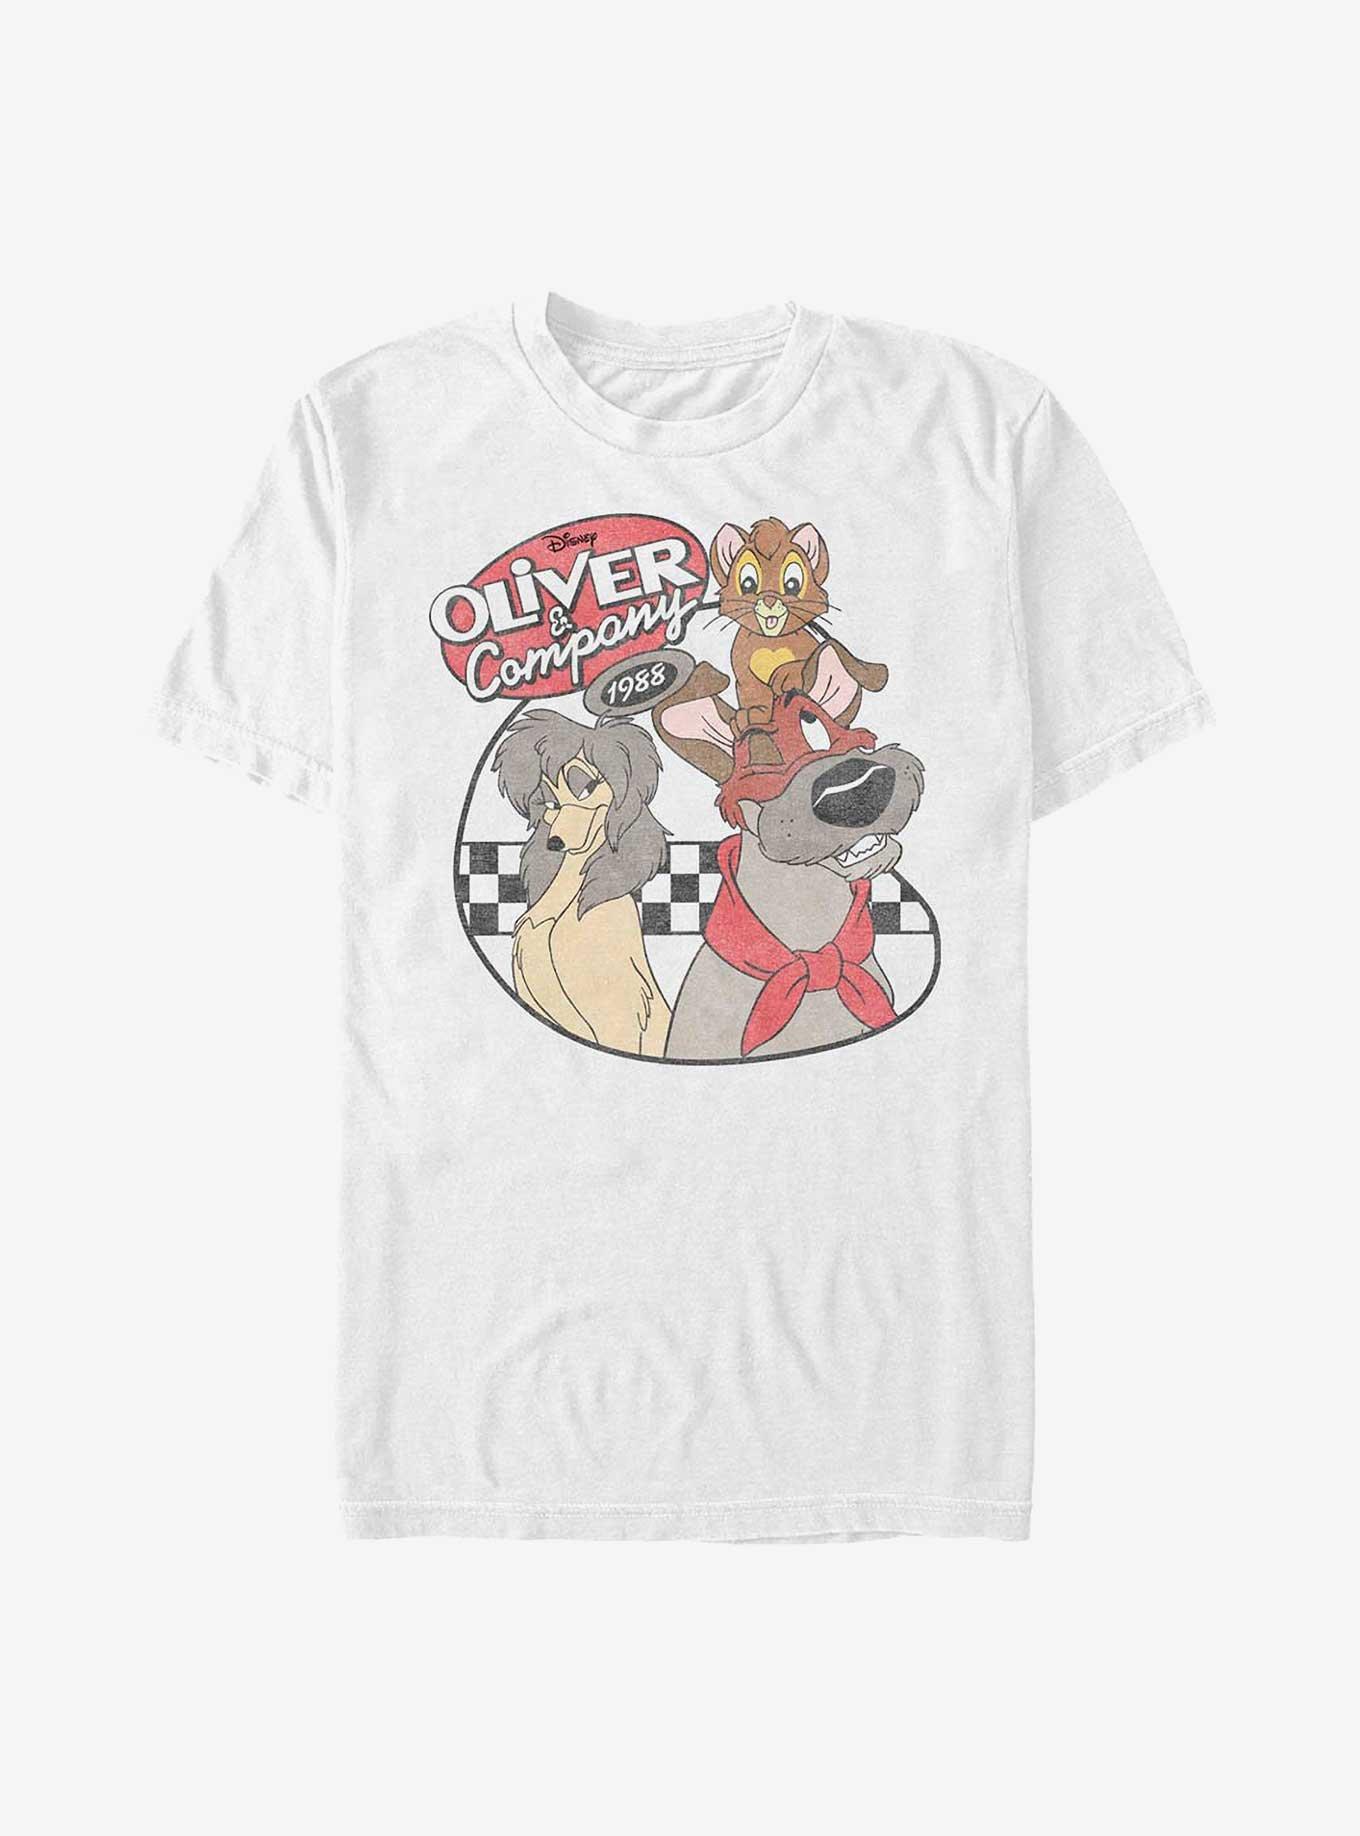 Wholesale Dodger/Raider t-shirt, Dodger shirt, Raider shirt for your shop